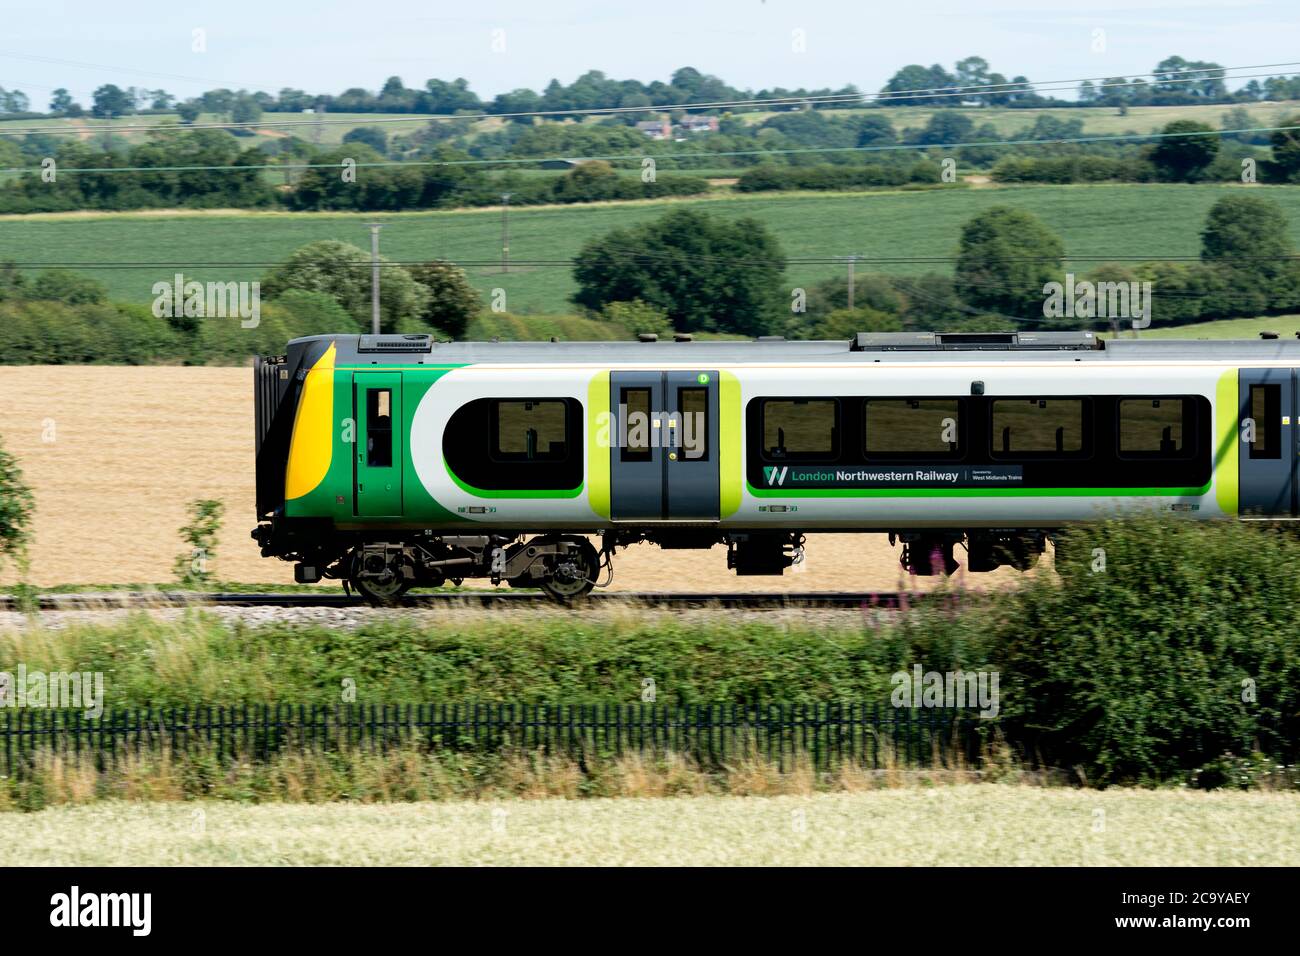 London NorthWestern Railway class 350 electric train on the West Coast Main Line, Northamptonshire, England, UK Stock Photo